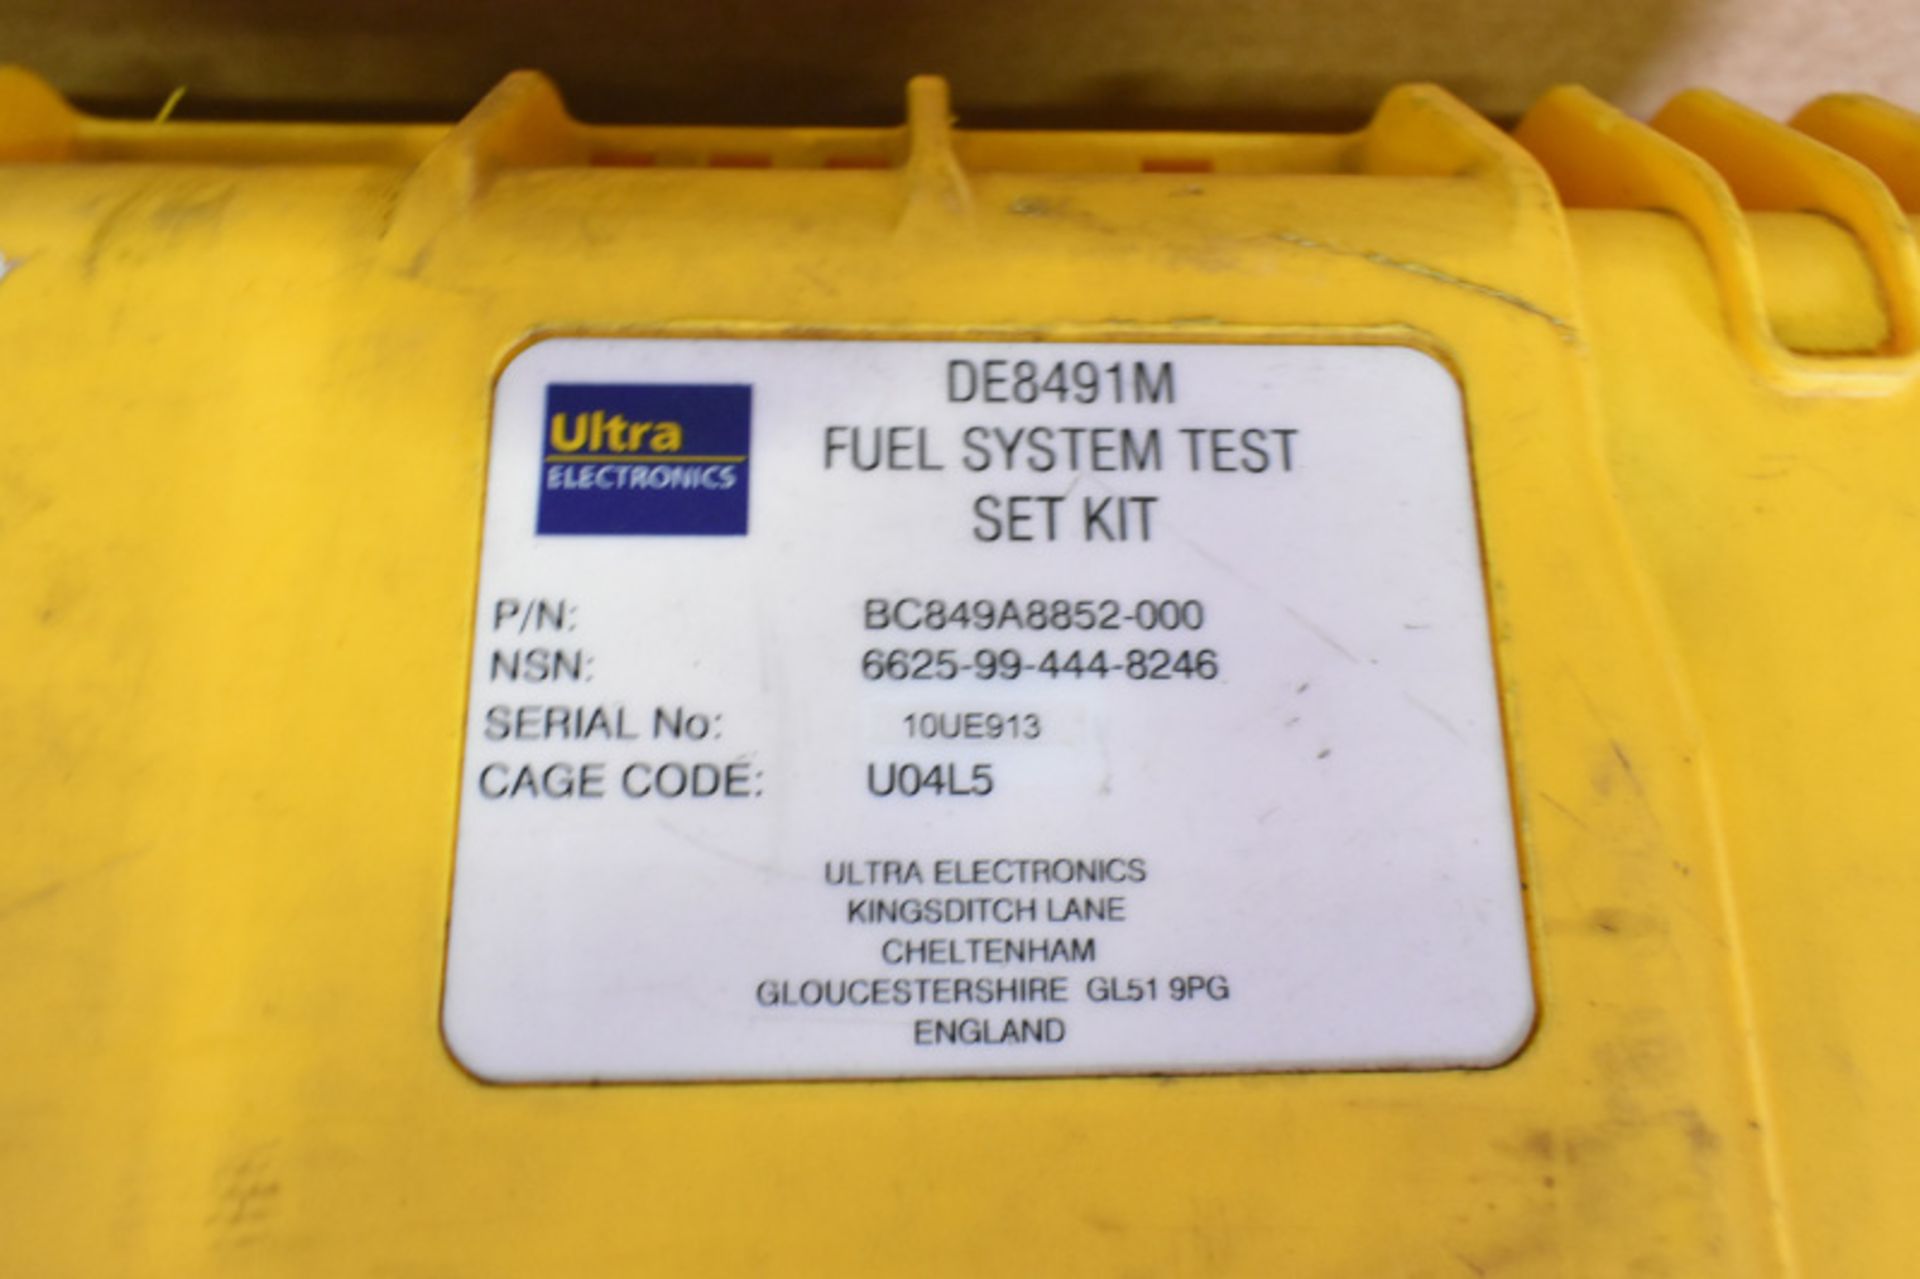 Ultra Electronics DE8491M Fuel System Test Set Kit - Image 2 of 4